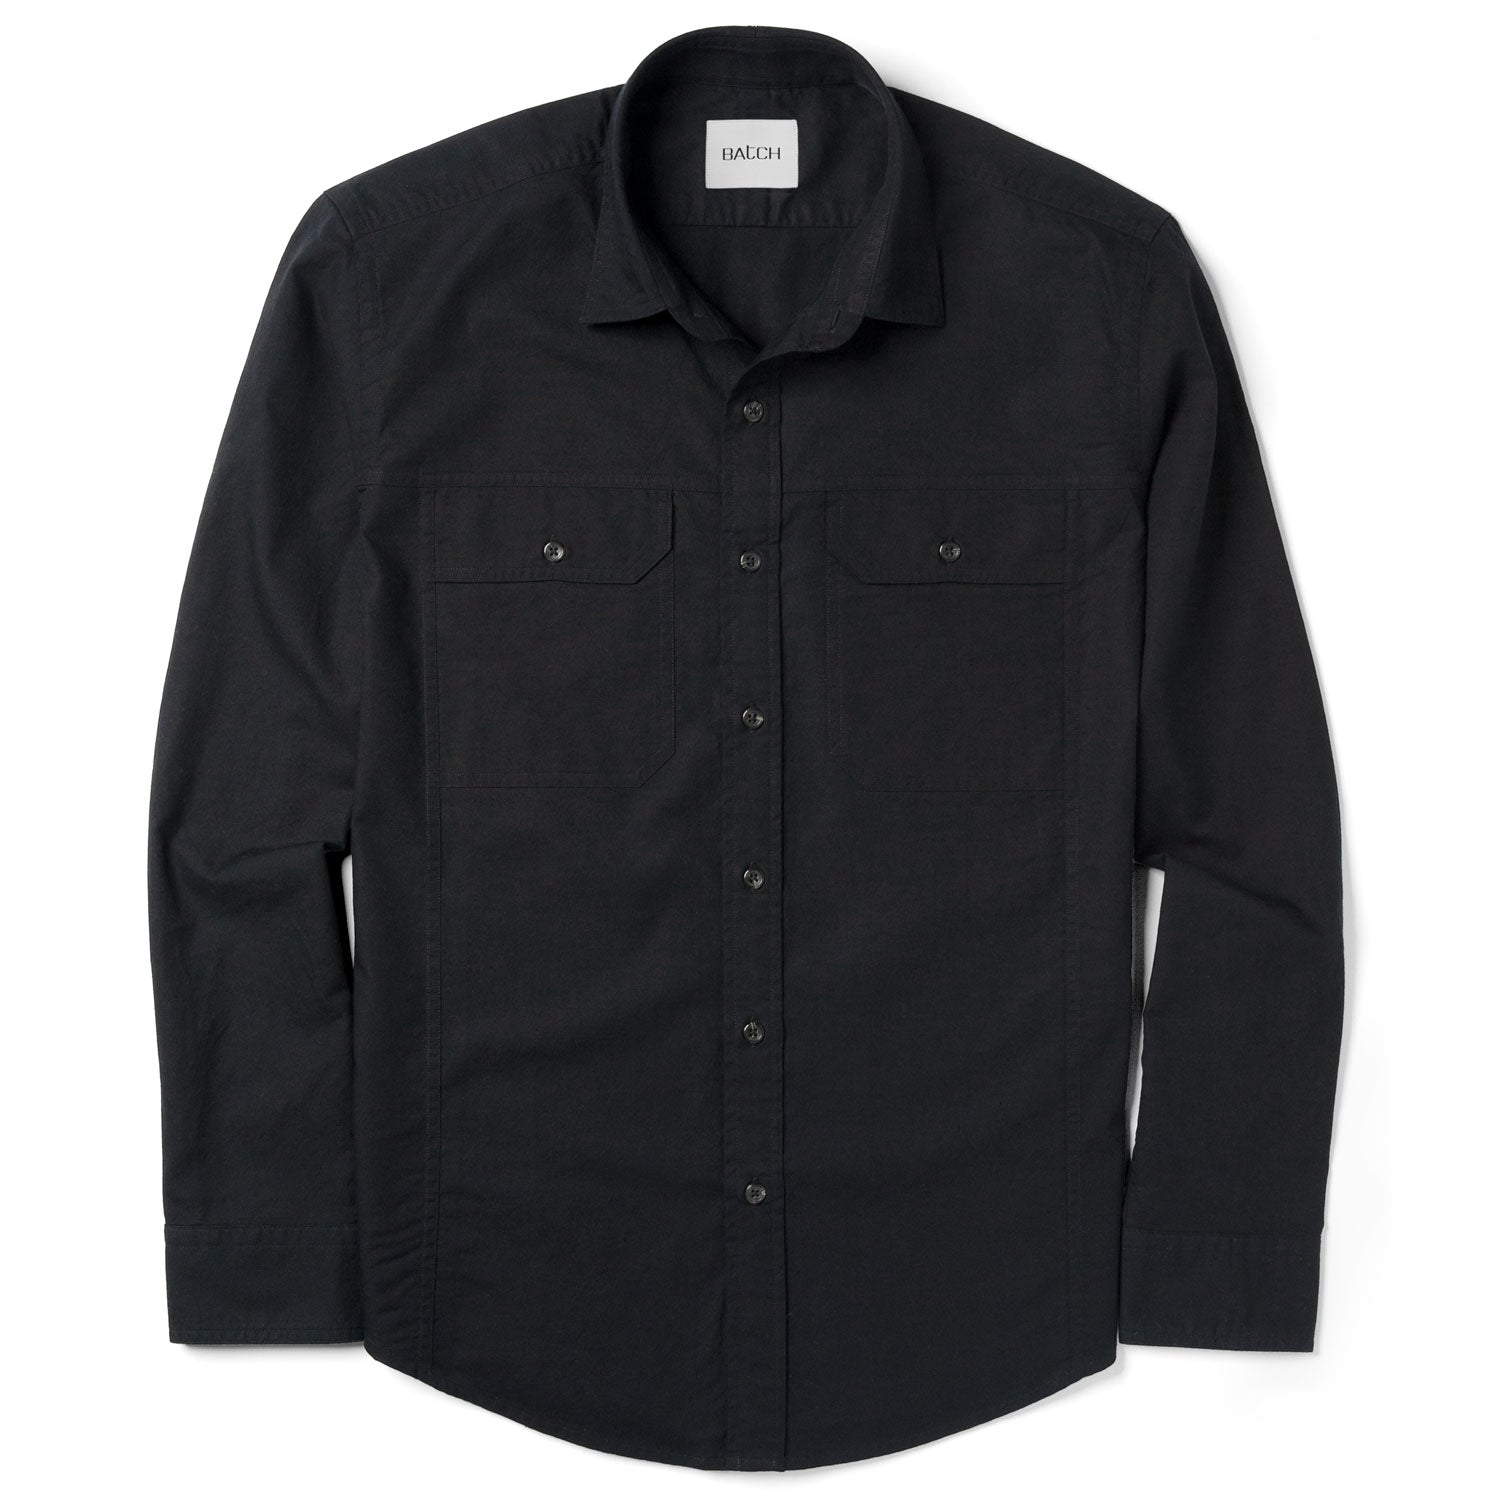 Operator Utility Shirt – Black Cotton Oxford